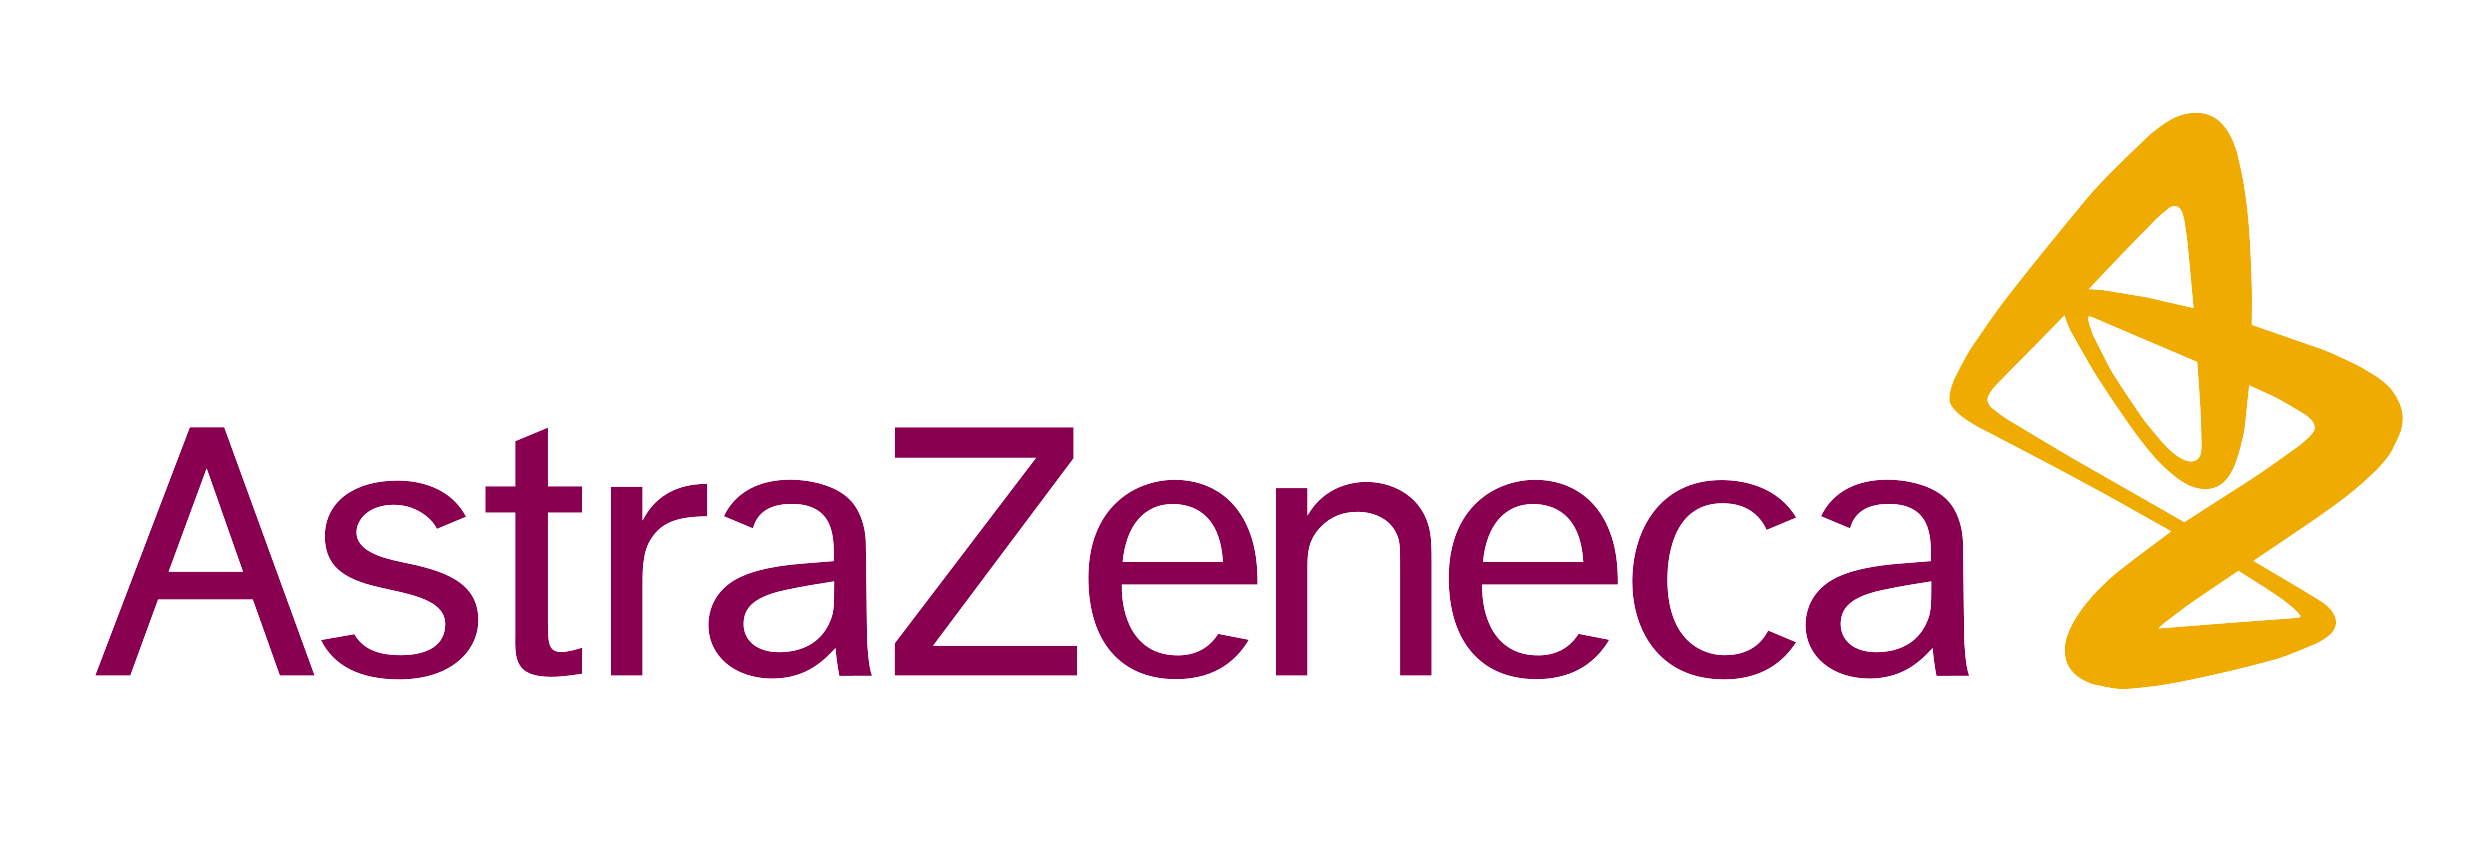 AstraZeneca-Logo.wine.png